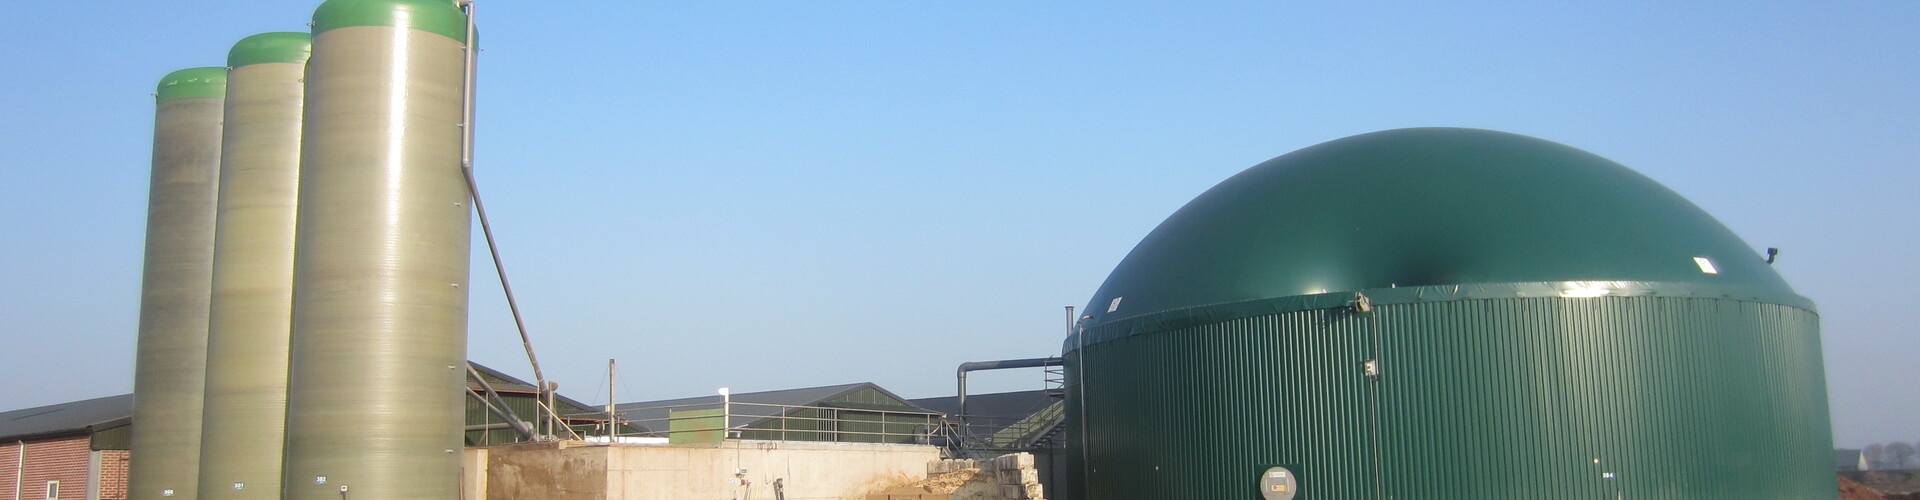 Biogas installation Reusel, the Netherlands